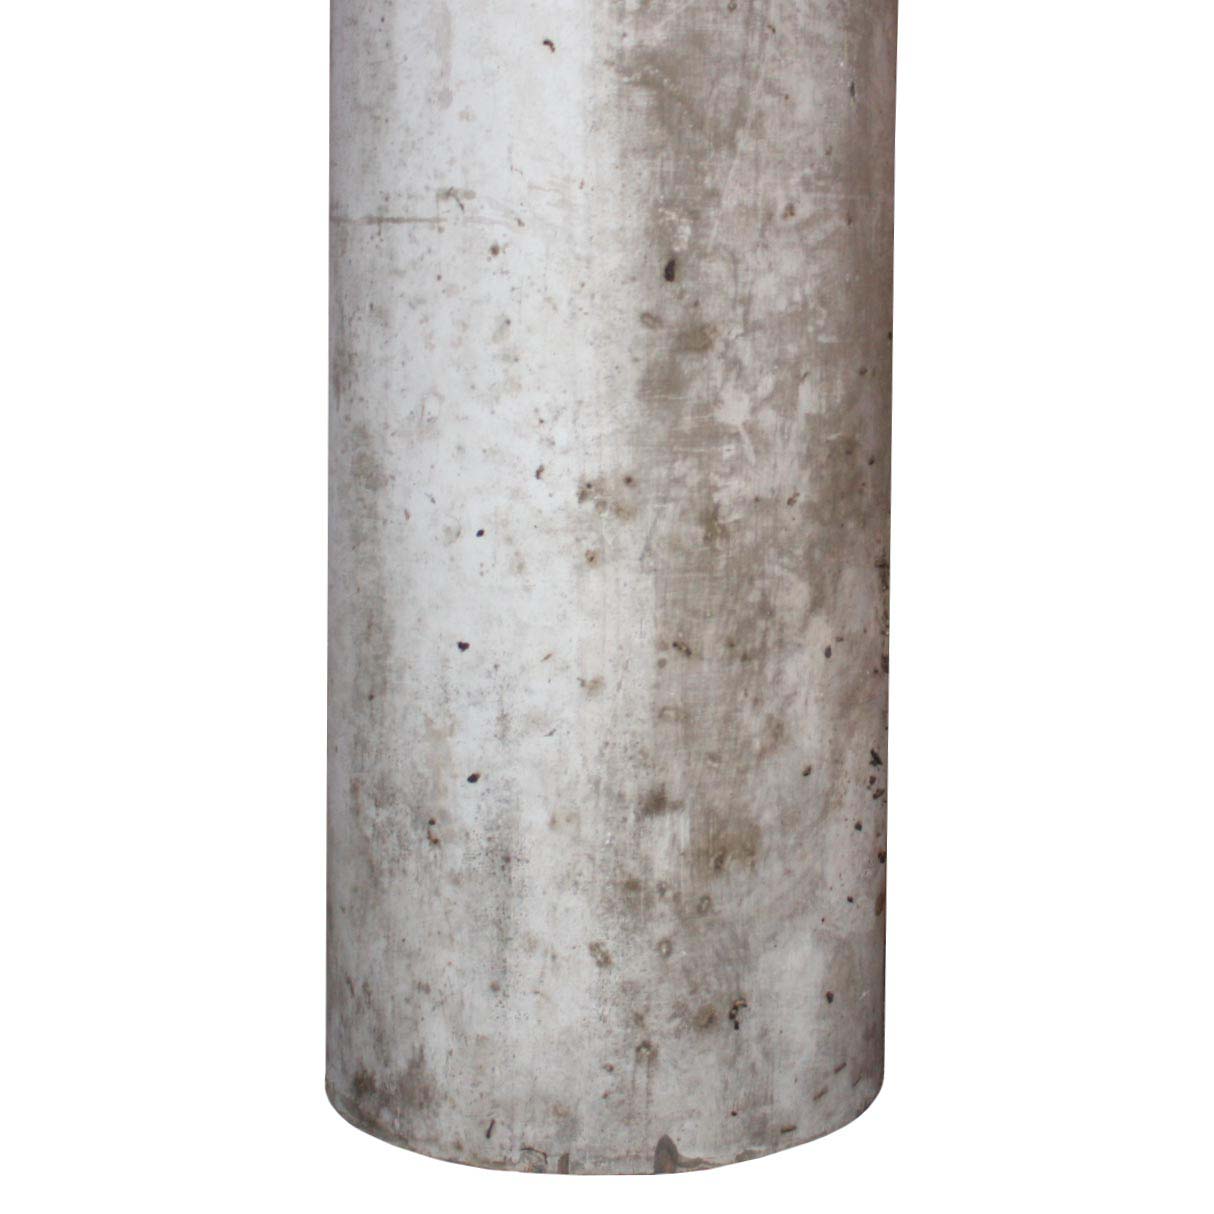 Substantial Antique Column bottom